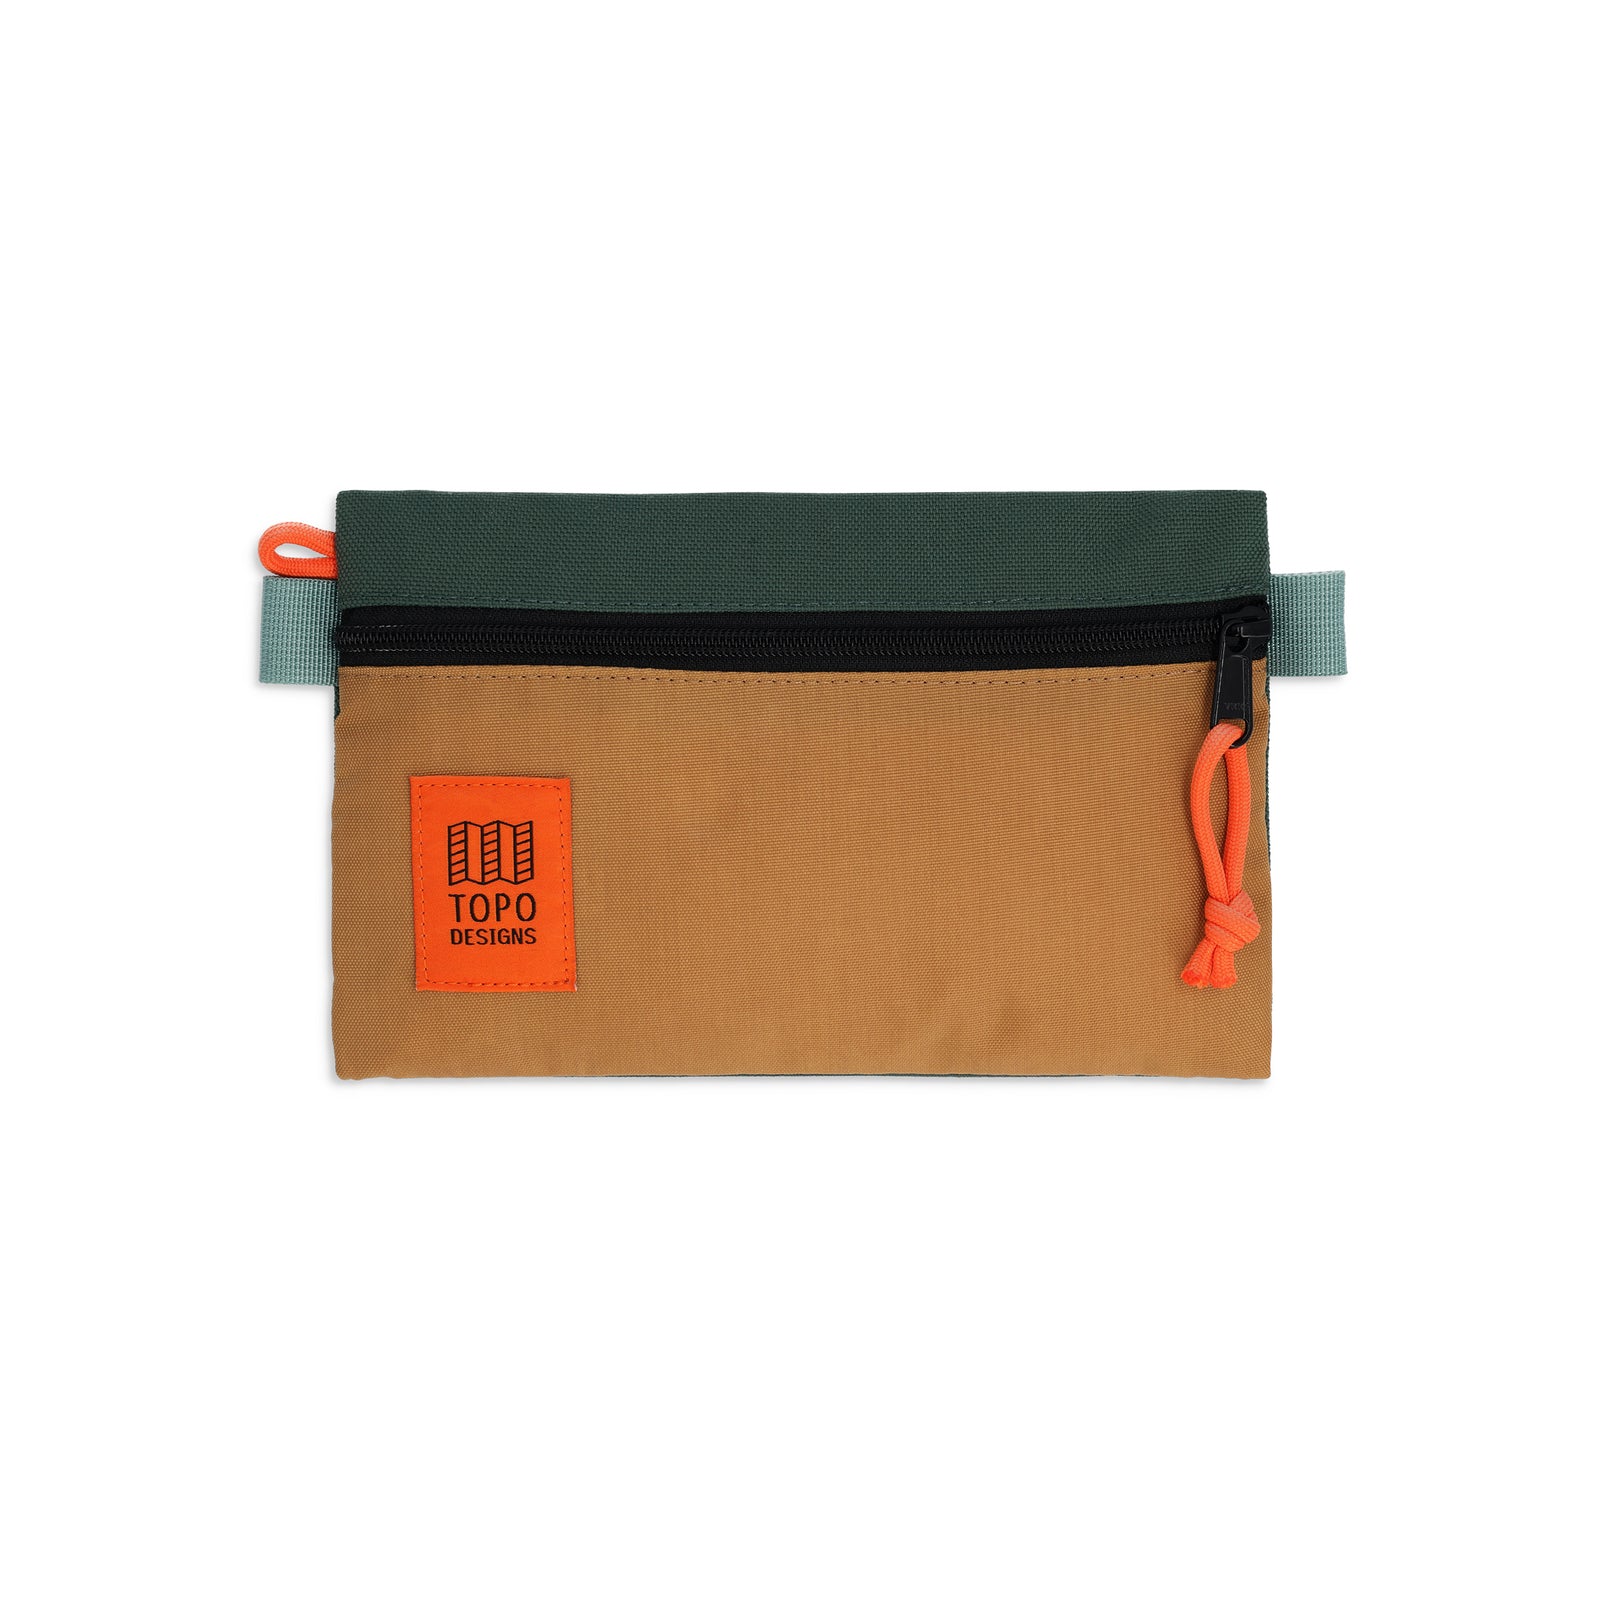 General shot Topo Designs Accessory Bag "Small" in "Khaki / Forest"